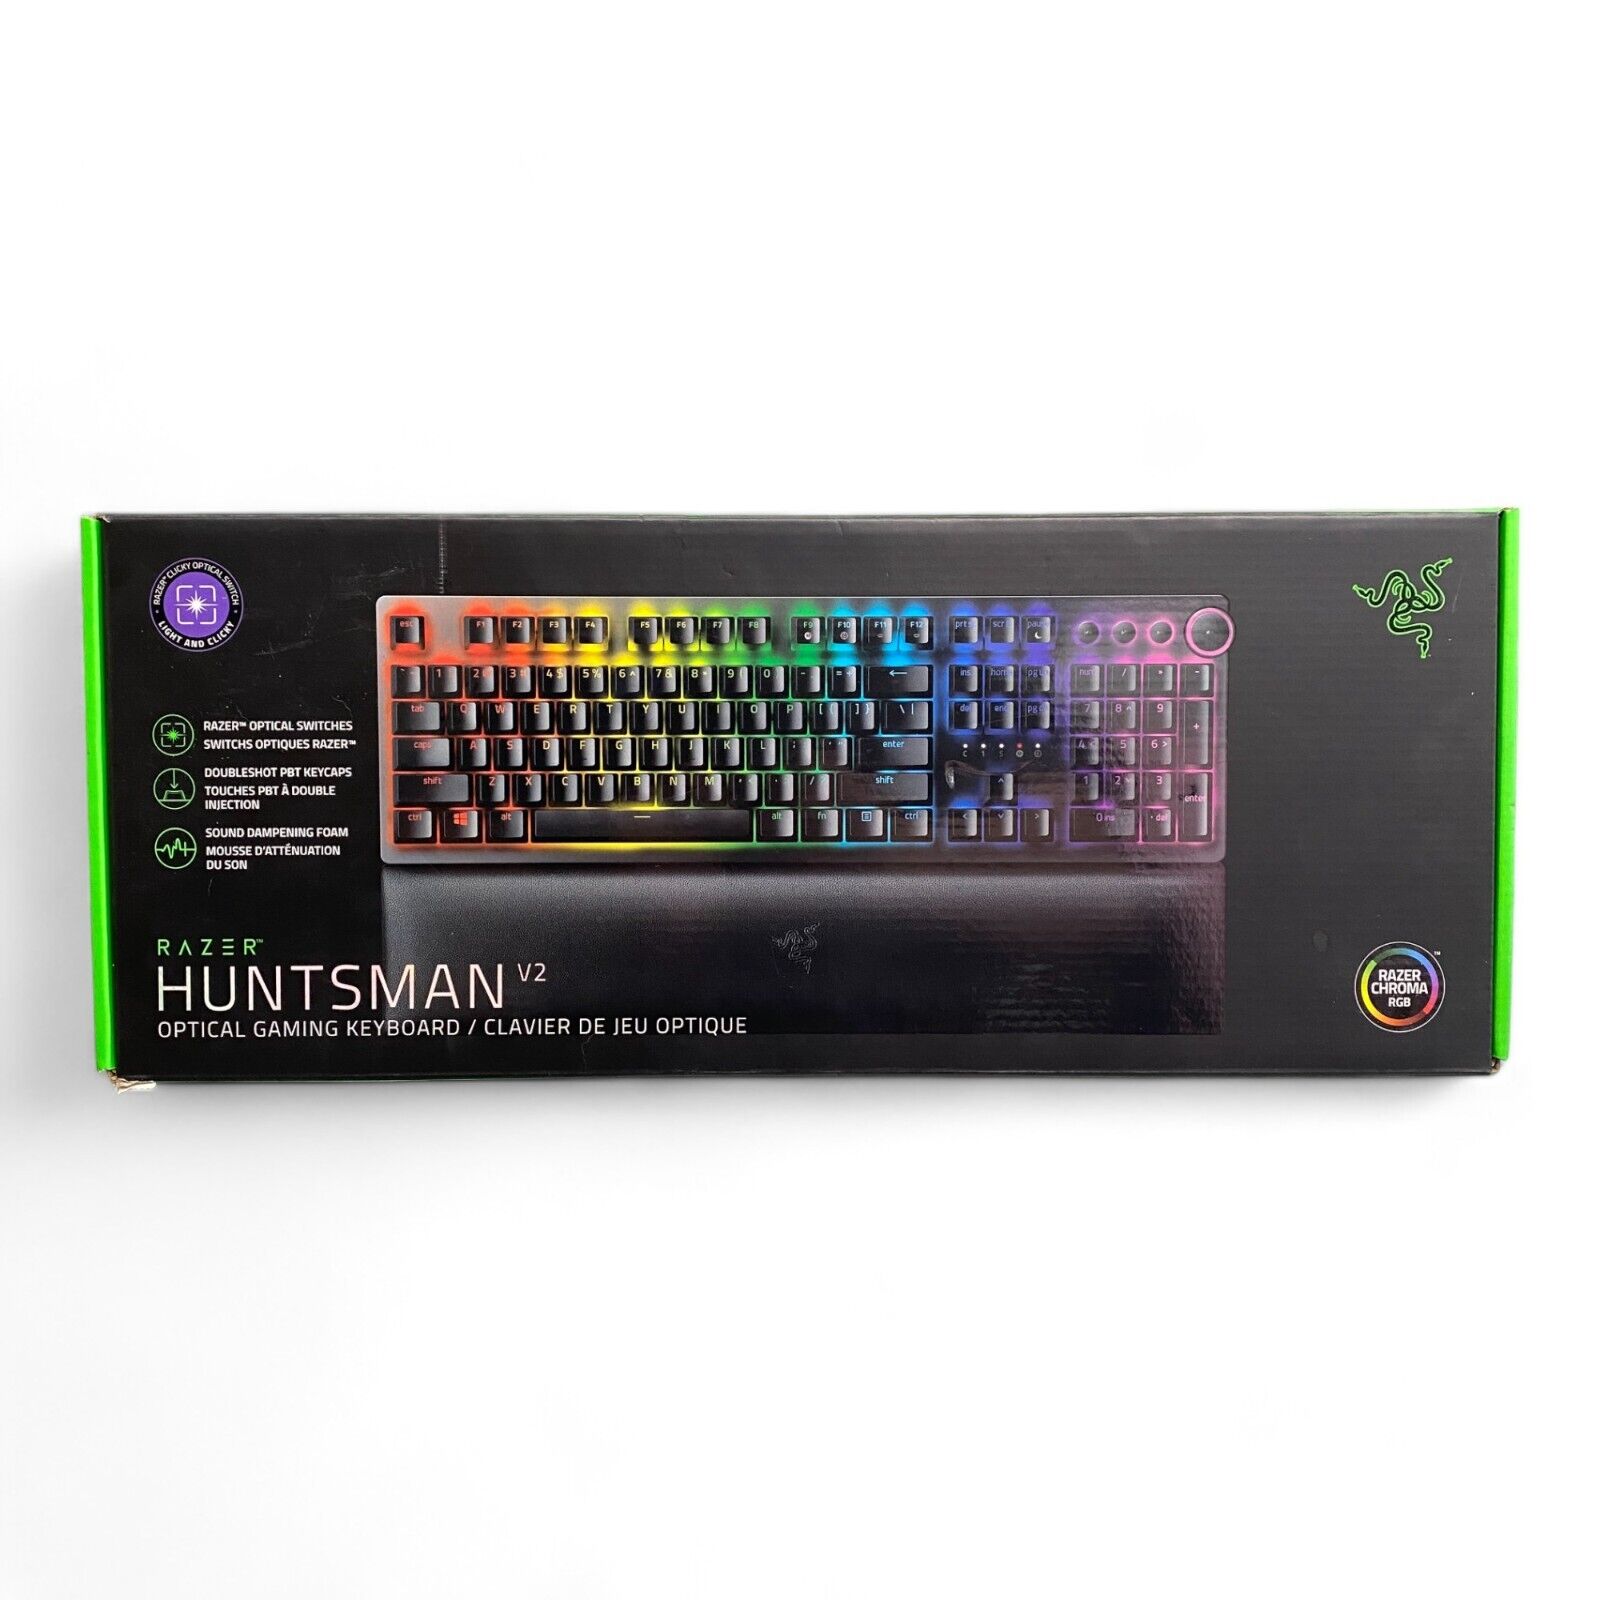 RAZER HUNTSMAN V2 - Optical Gaming Keyboard - Clicky Optical Switch - Wrist Rest